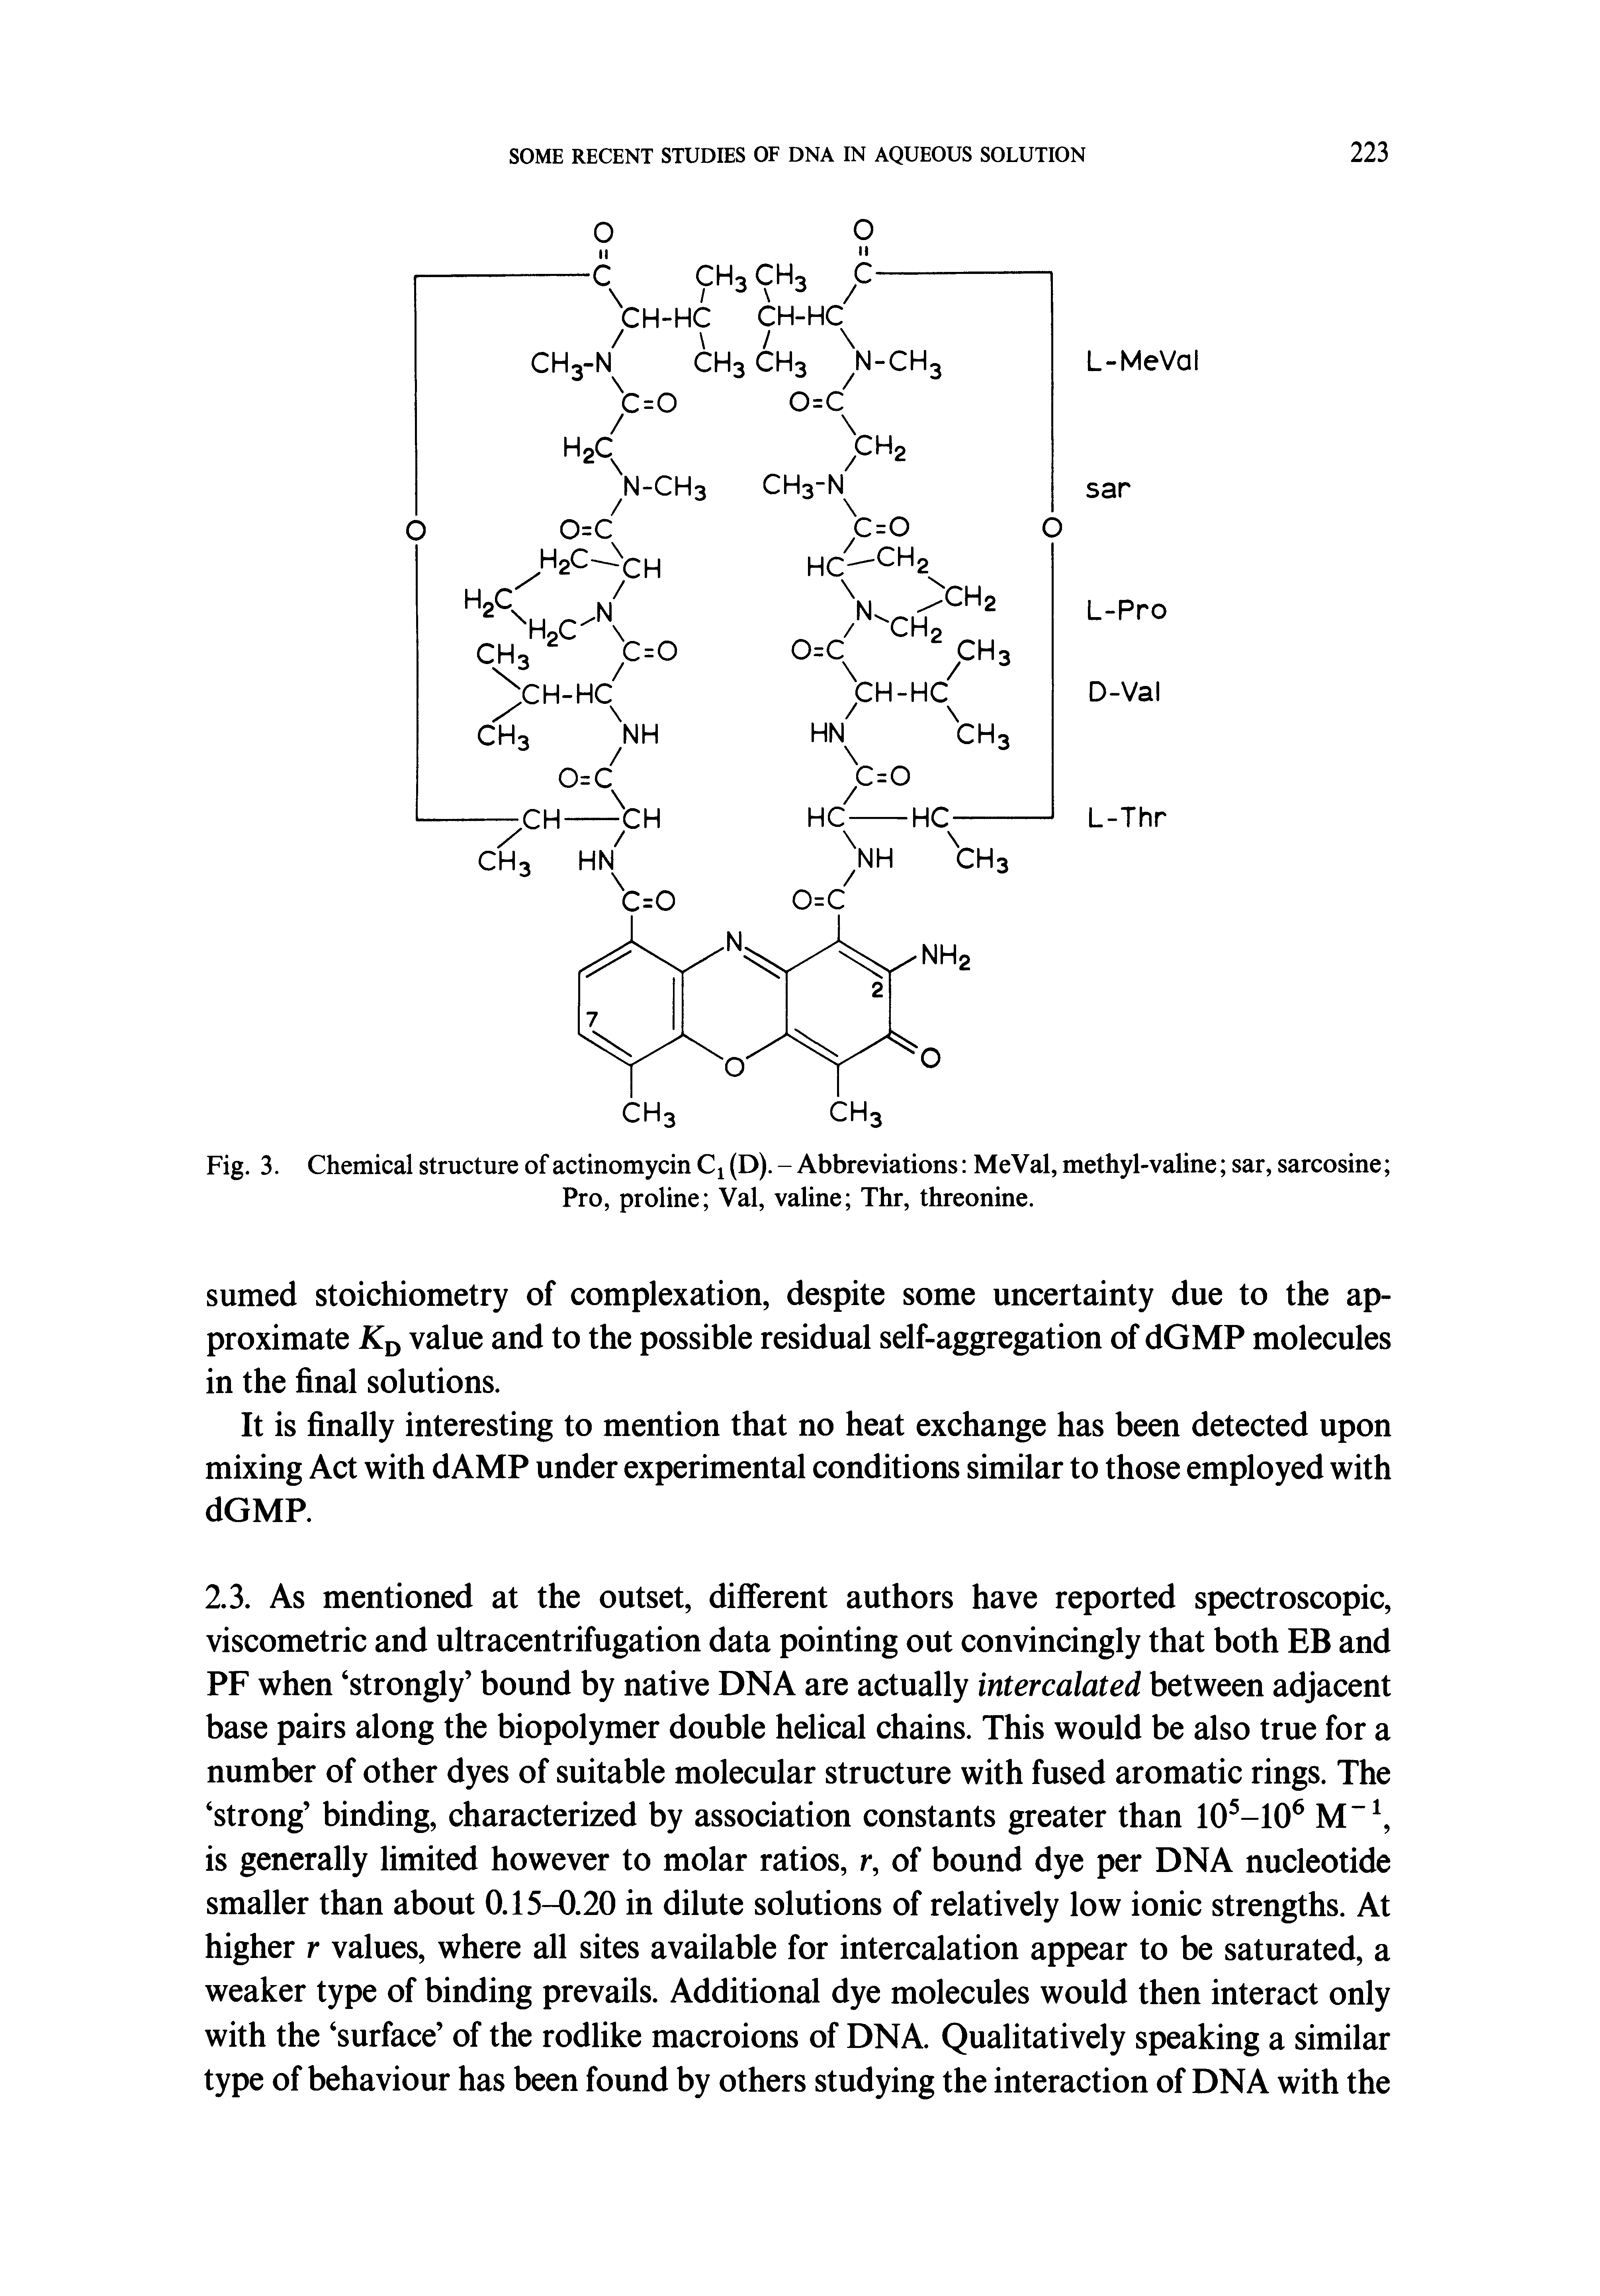 Fig. 3. Chemical structure of actinomycin Cj (D). - Abbreviations MeVal, methyl-valine sar, sarcosine Pro, proline Val, valine Thr, threonine.